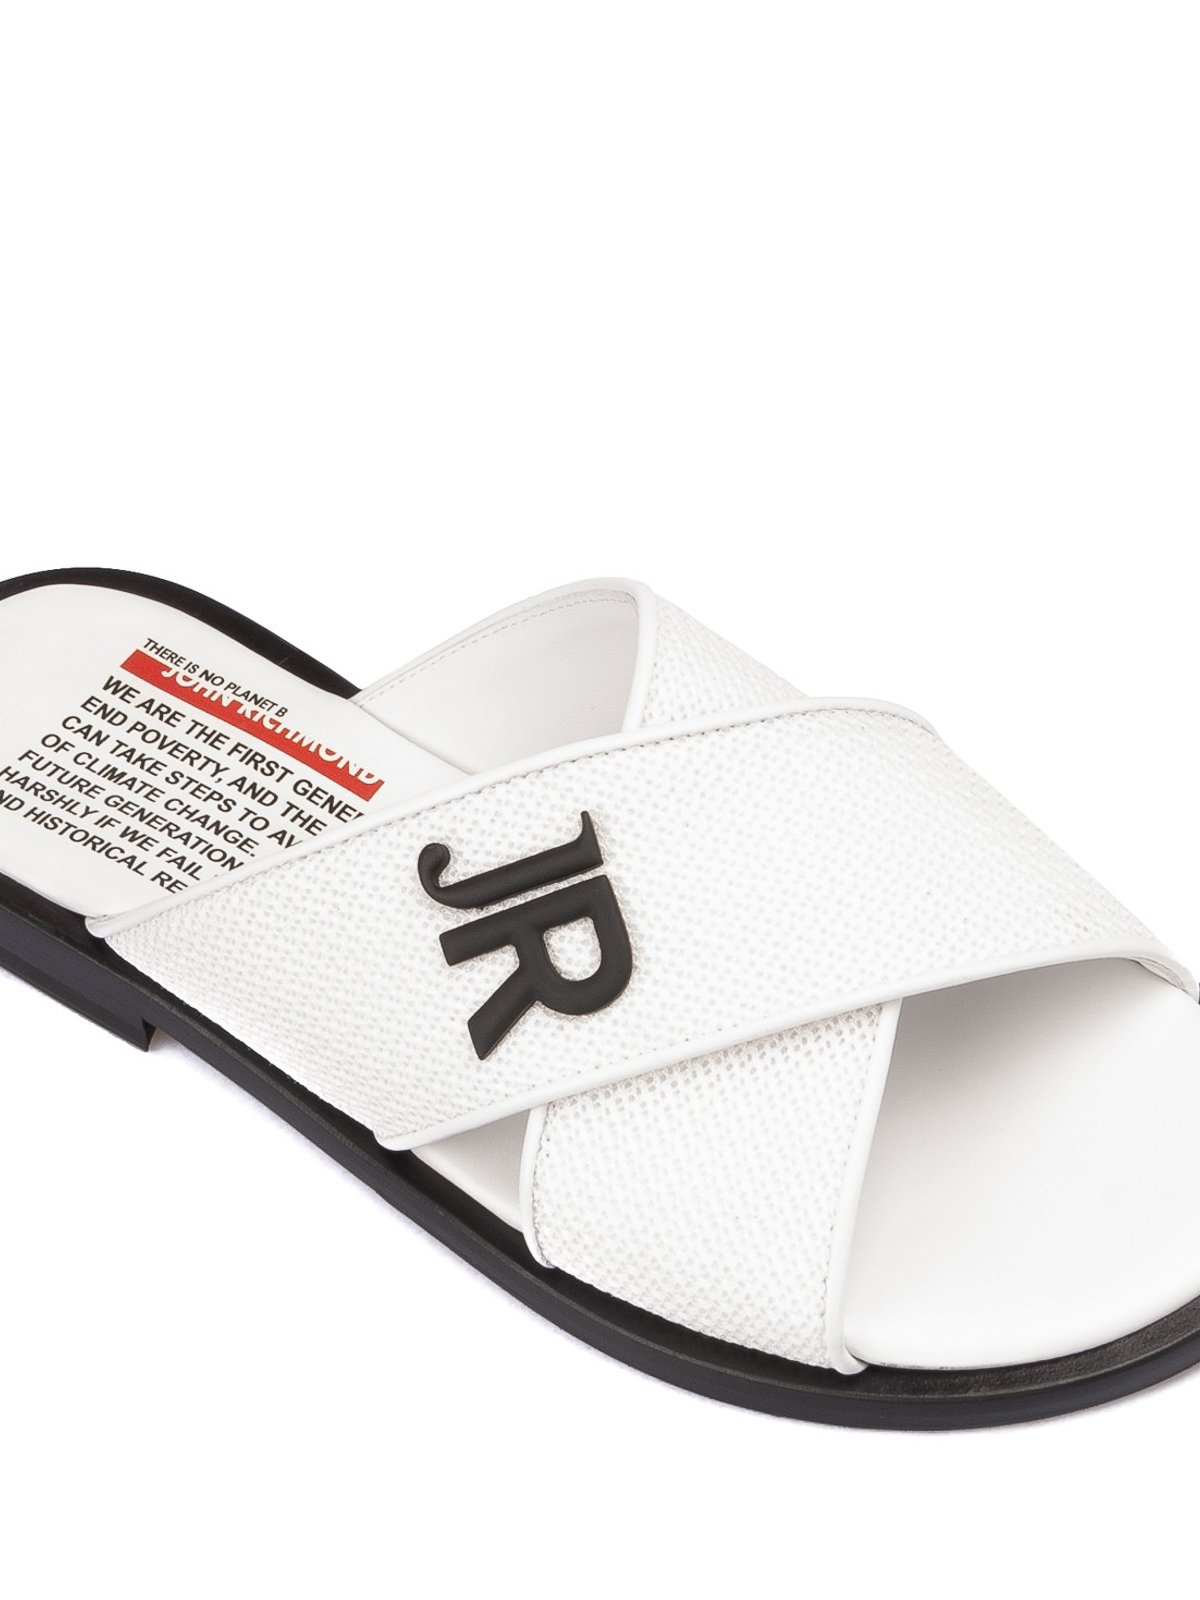 white leather flip flops